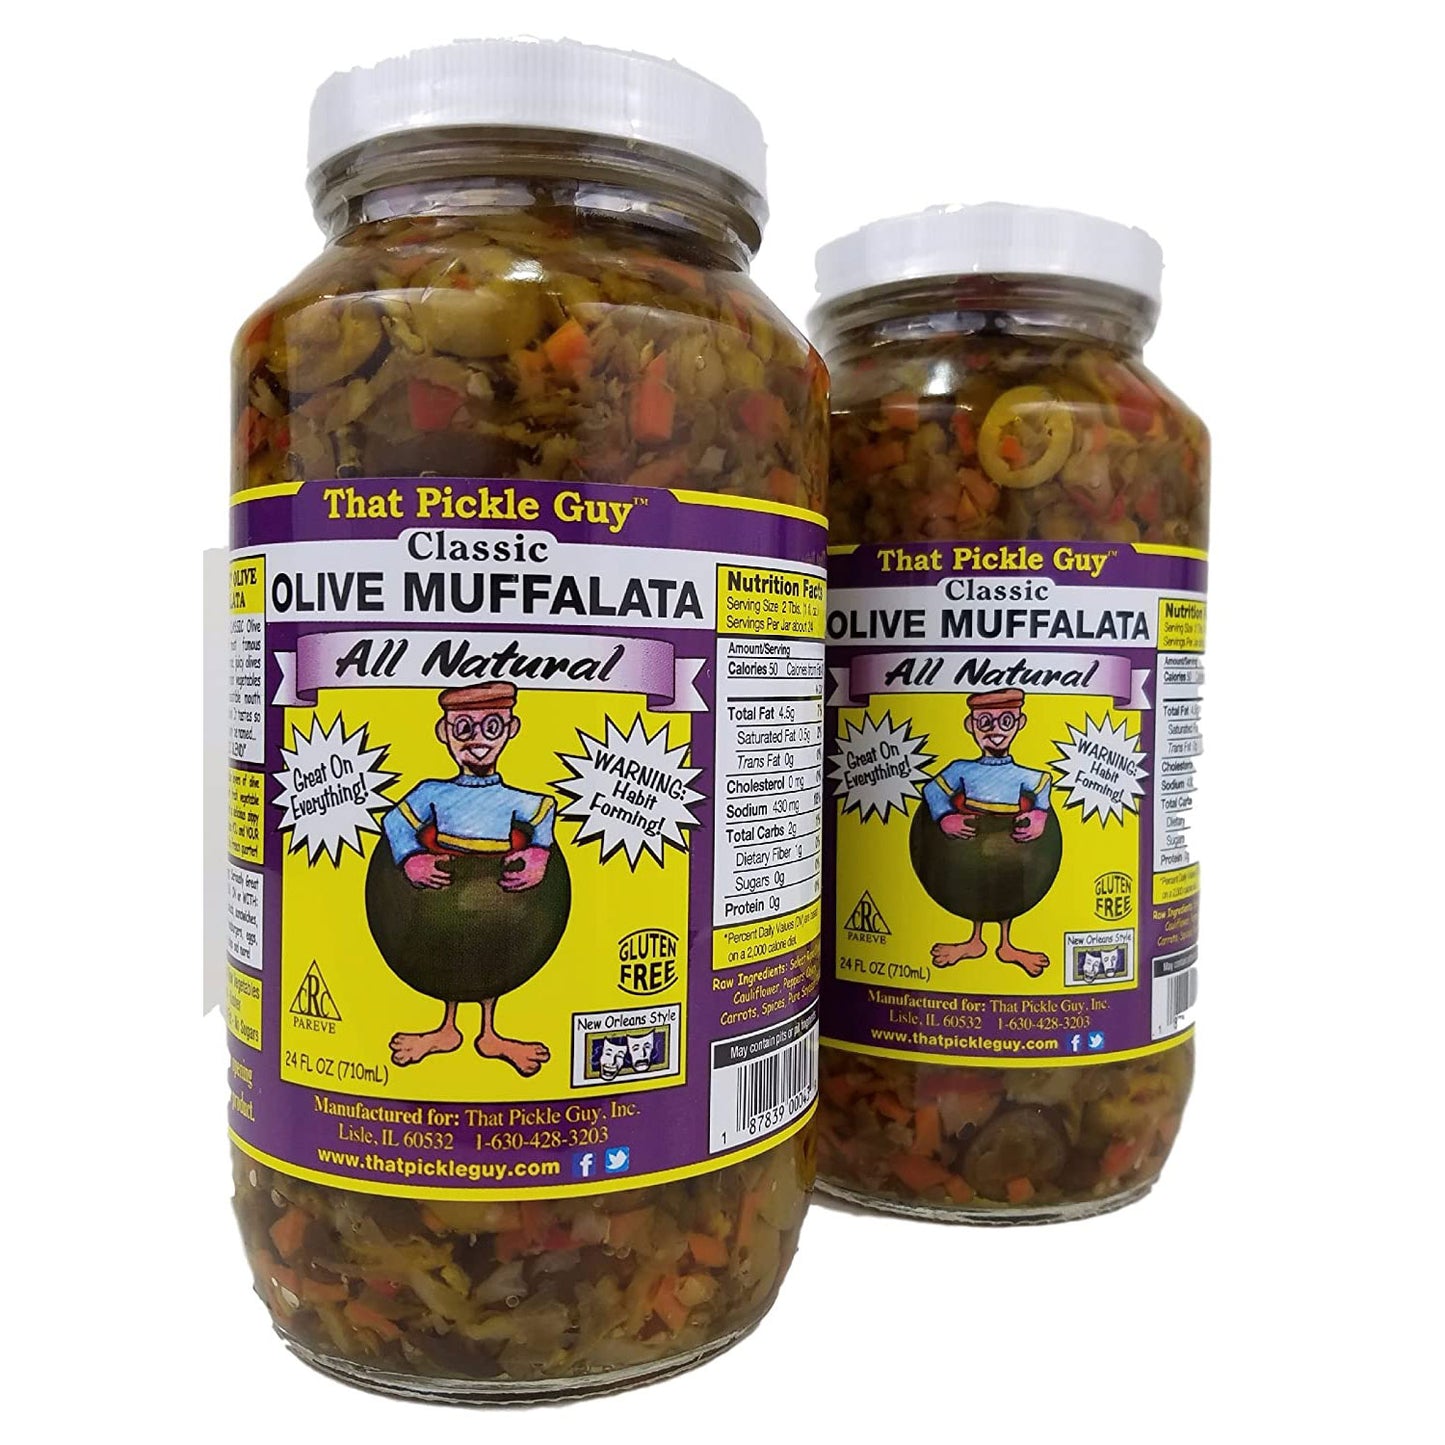 That Pickle Guy Classic Olive Muffalata (2 Pack, 24oz each)